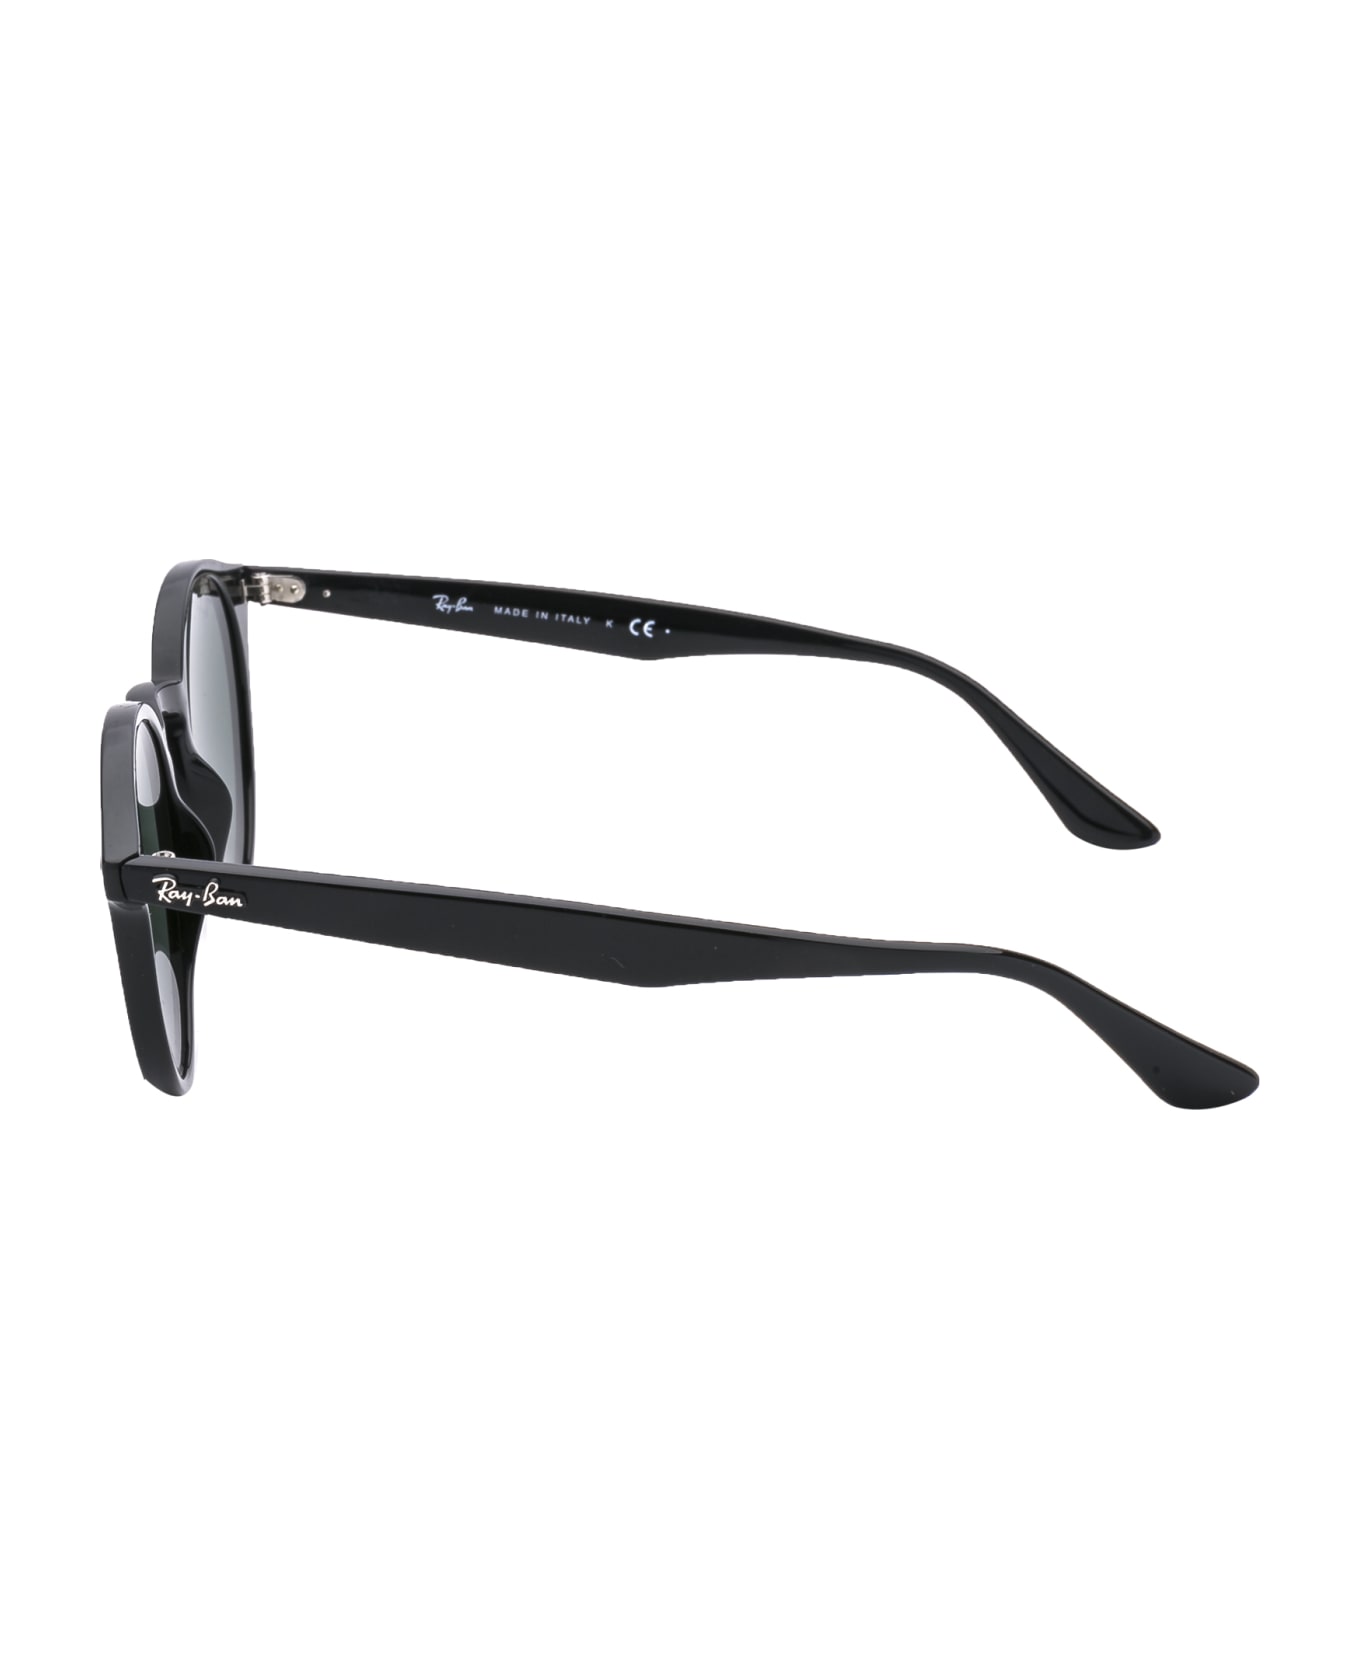 Ray-Ban 0rb2180 Sunglasses - 601/71 BLACK